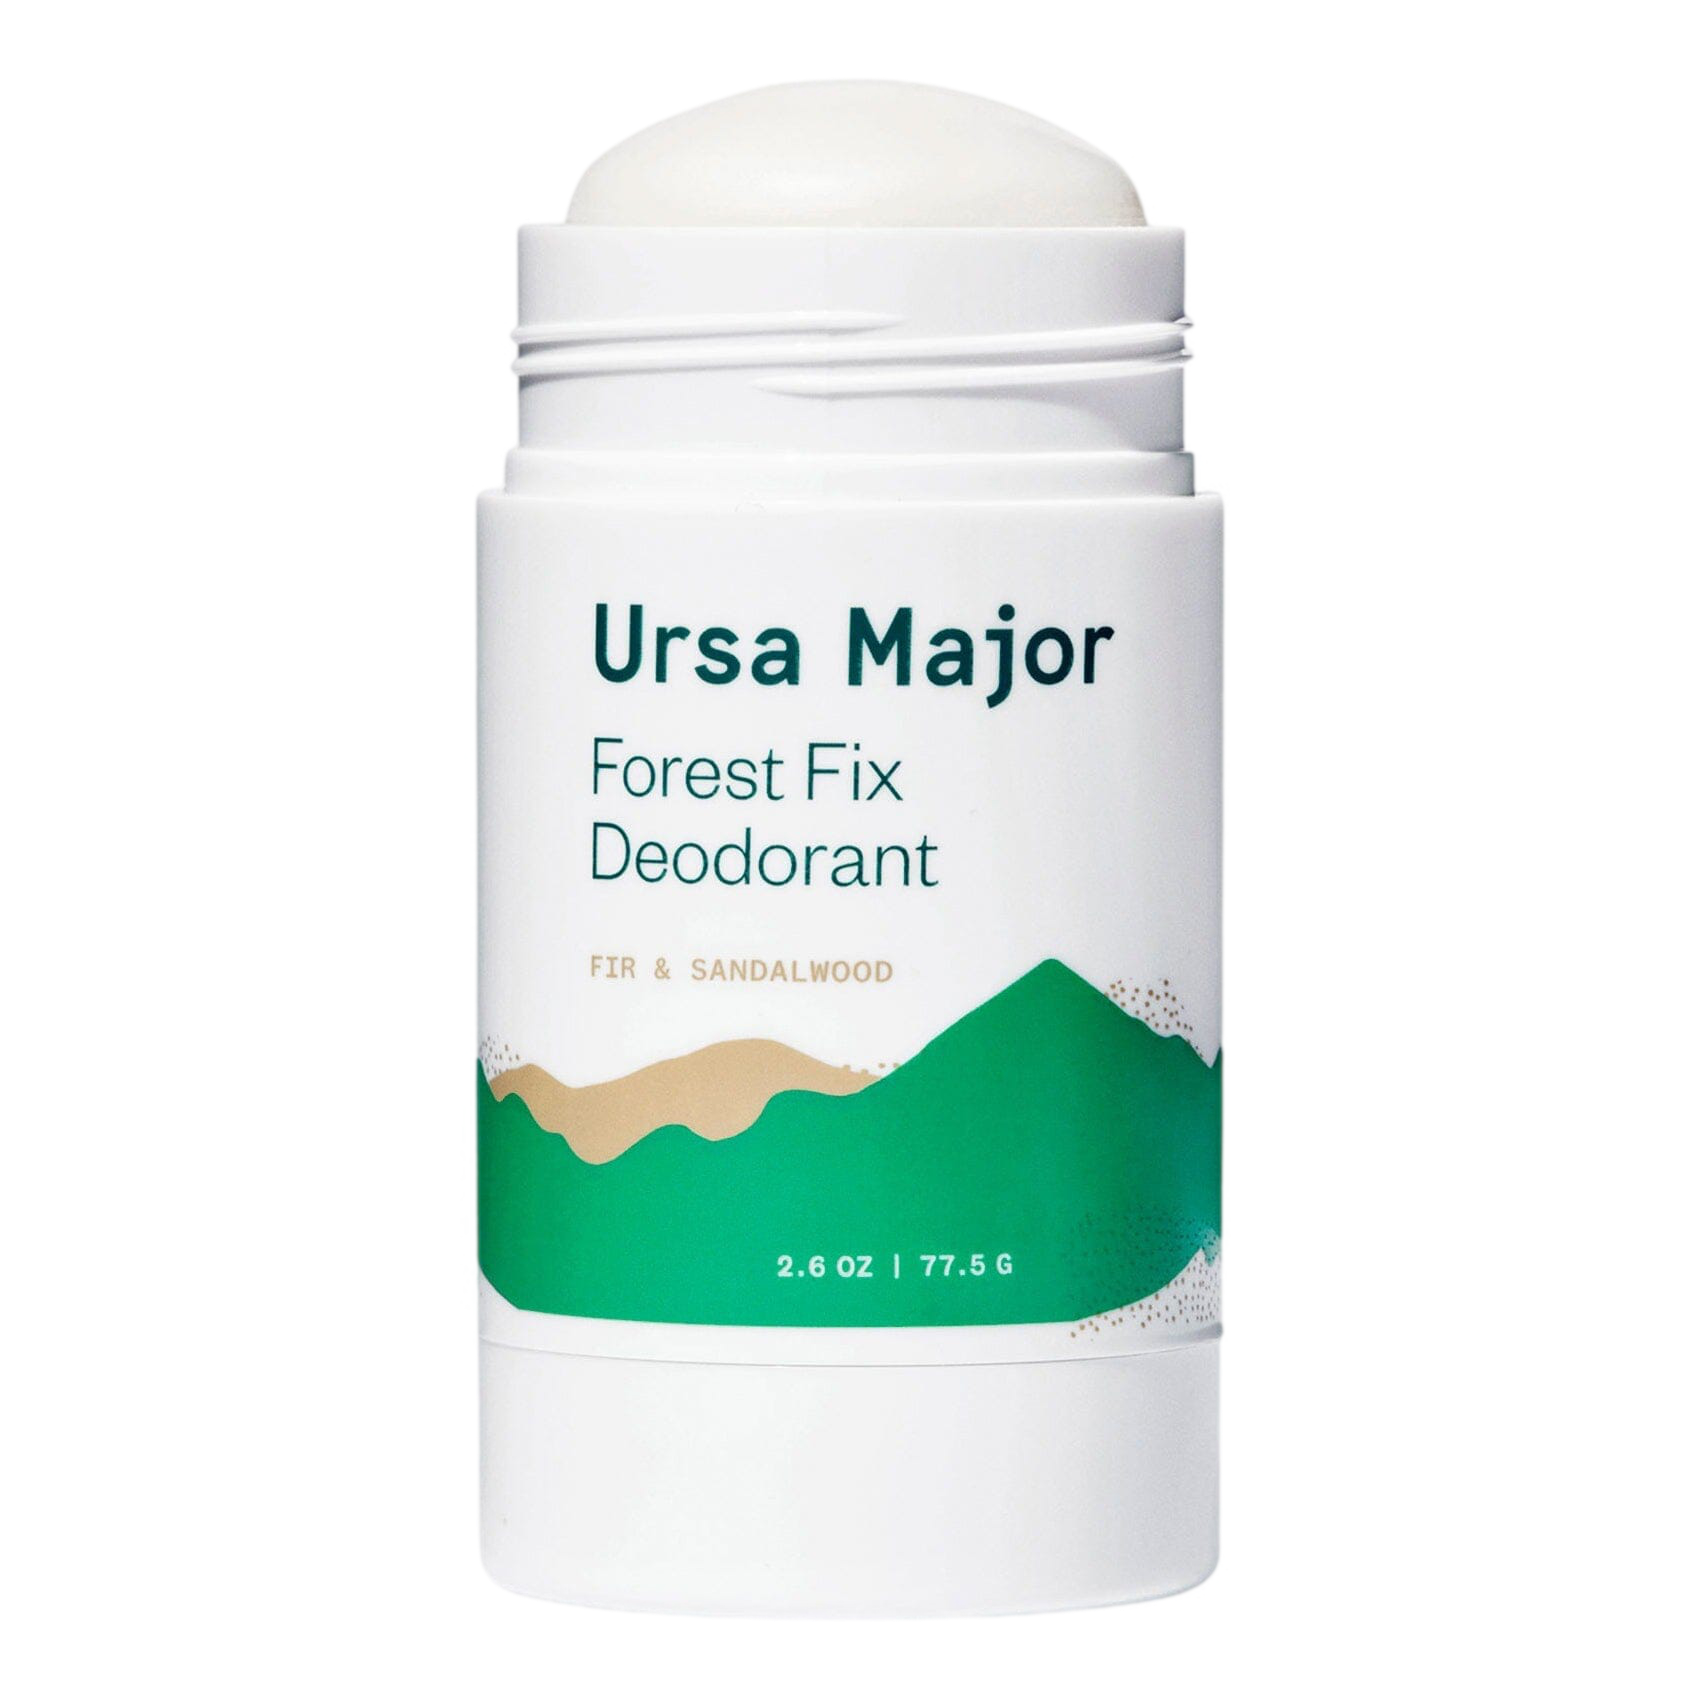 Ursa Major Forest Fix deodorant